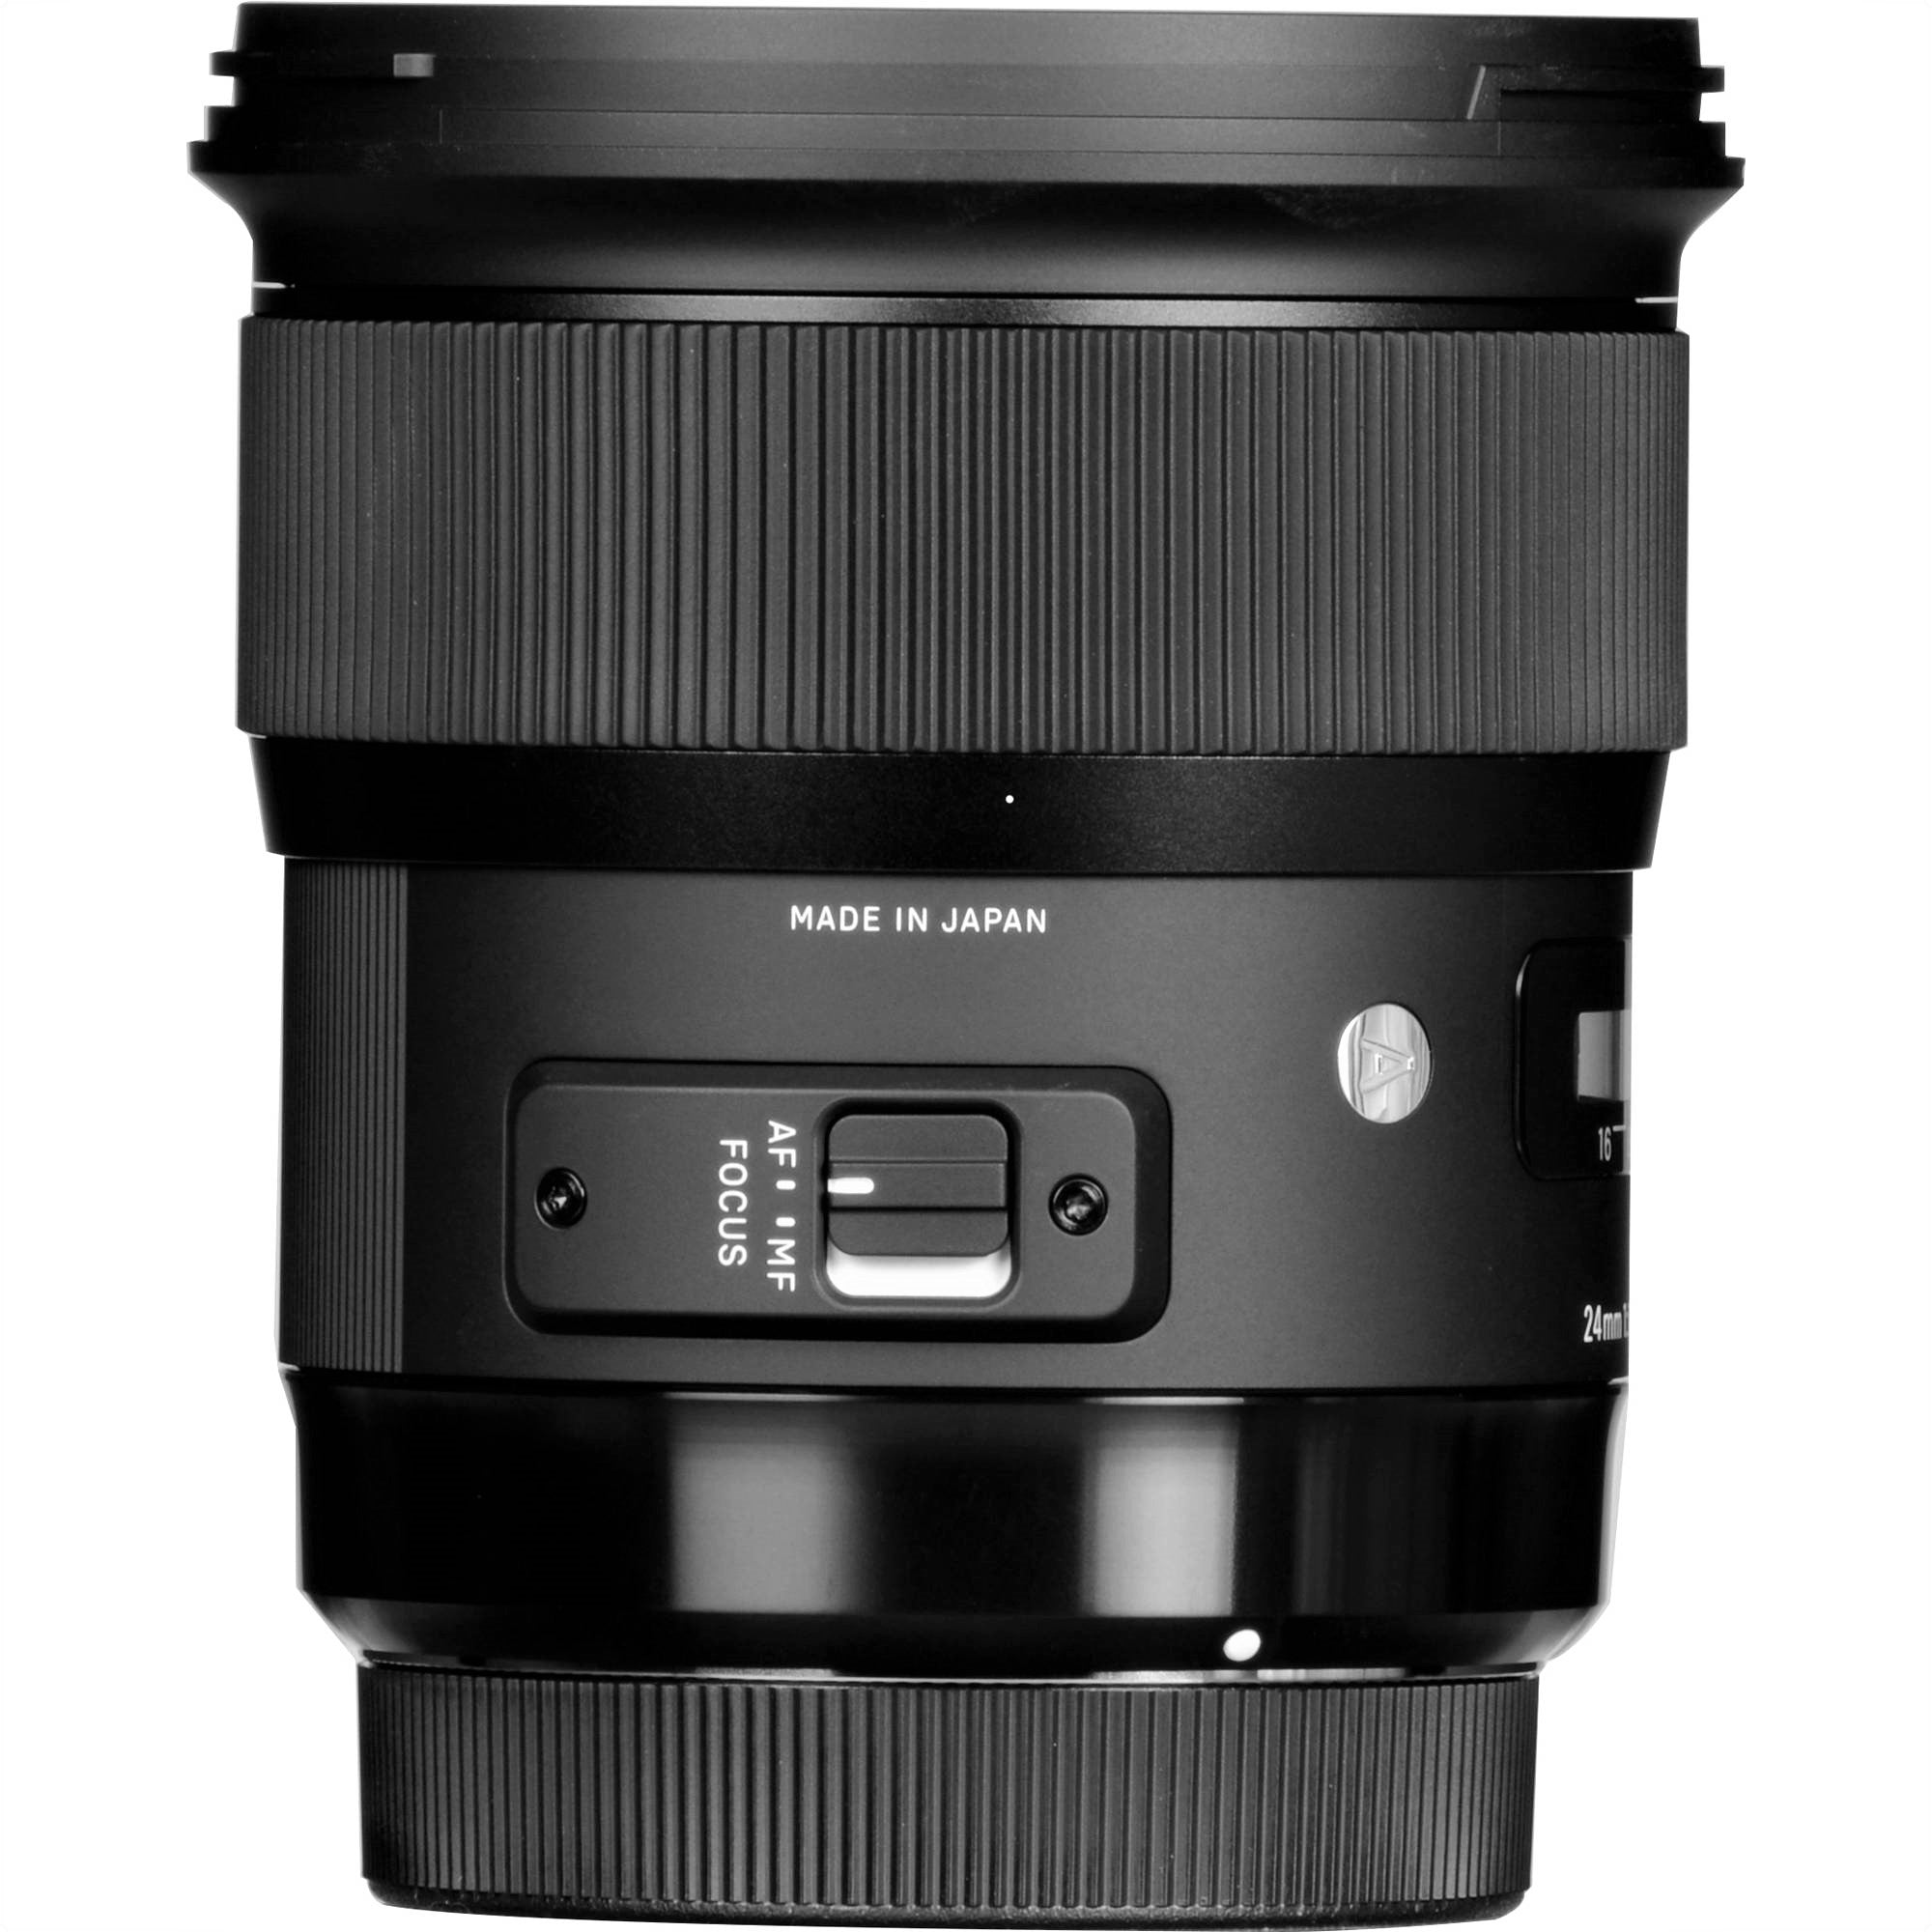 Sigma 24mm F1.4 DG HSM Art Lens for Sigma SA